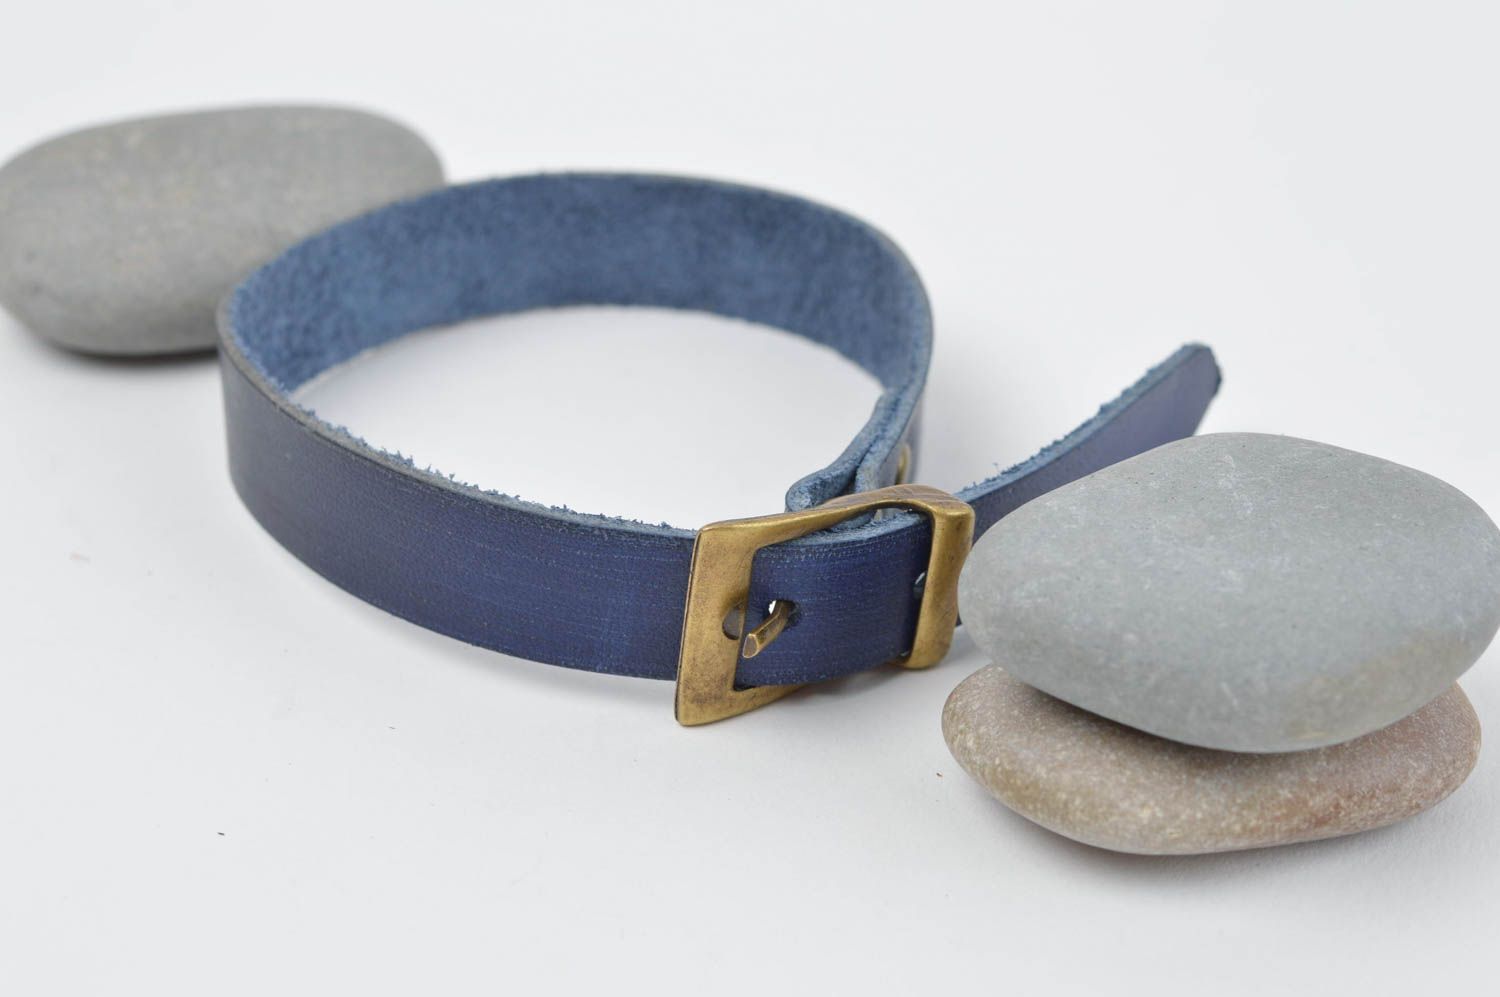 Stylish handmade leather bracelet leather goods fashion accessories gift ideas photo 1